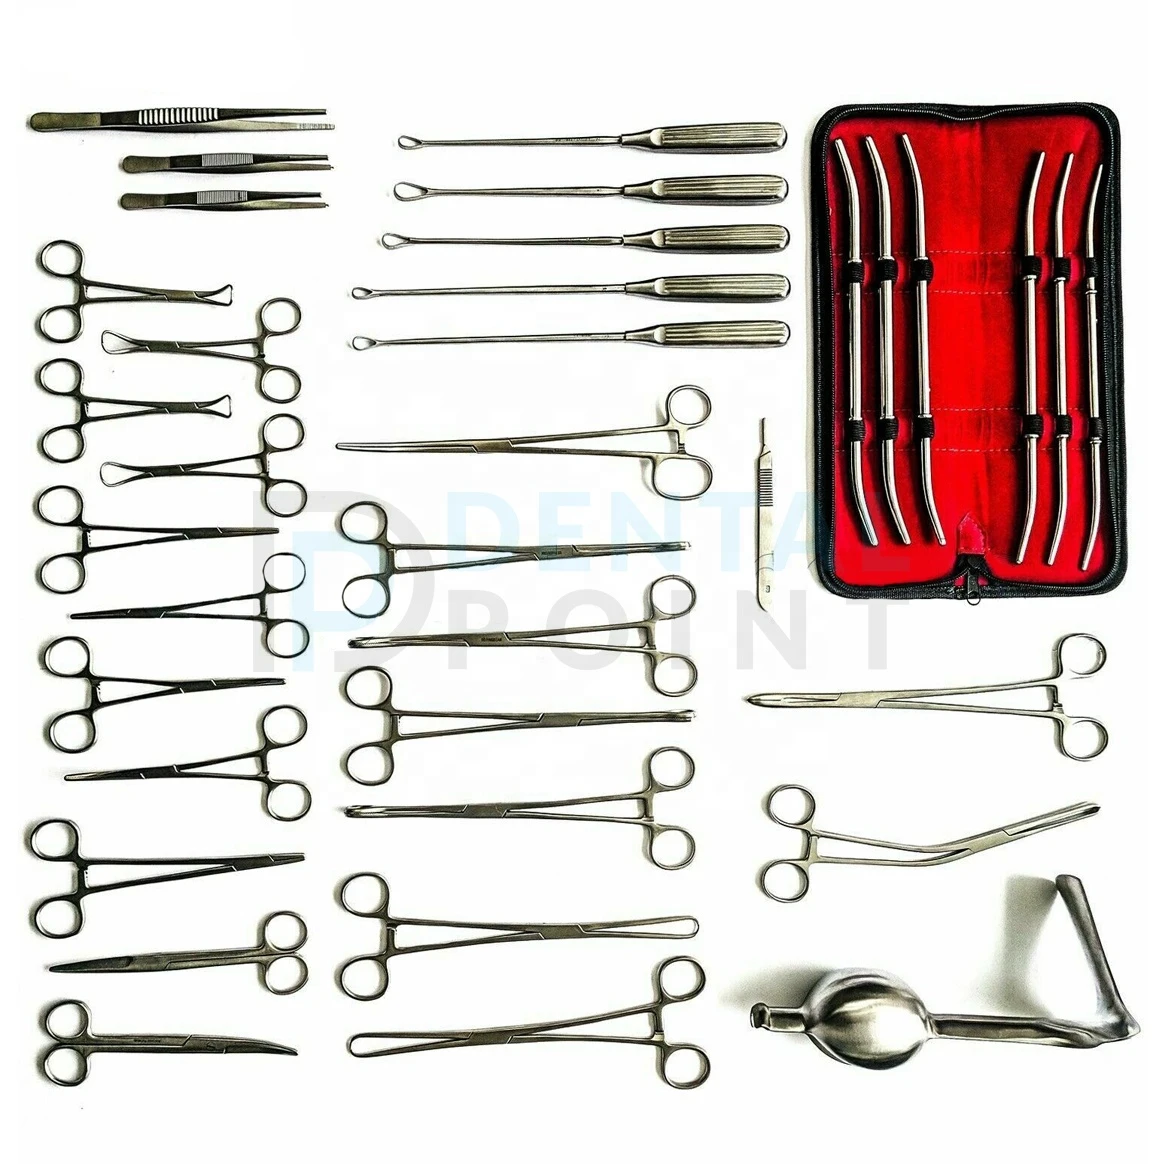 Dilatation Curettage set Gynecology Surgical Instruments Curette set Dilatation set kit Gynecology Instruments kit